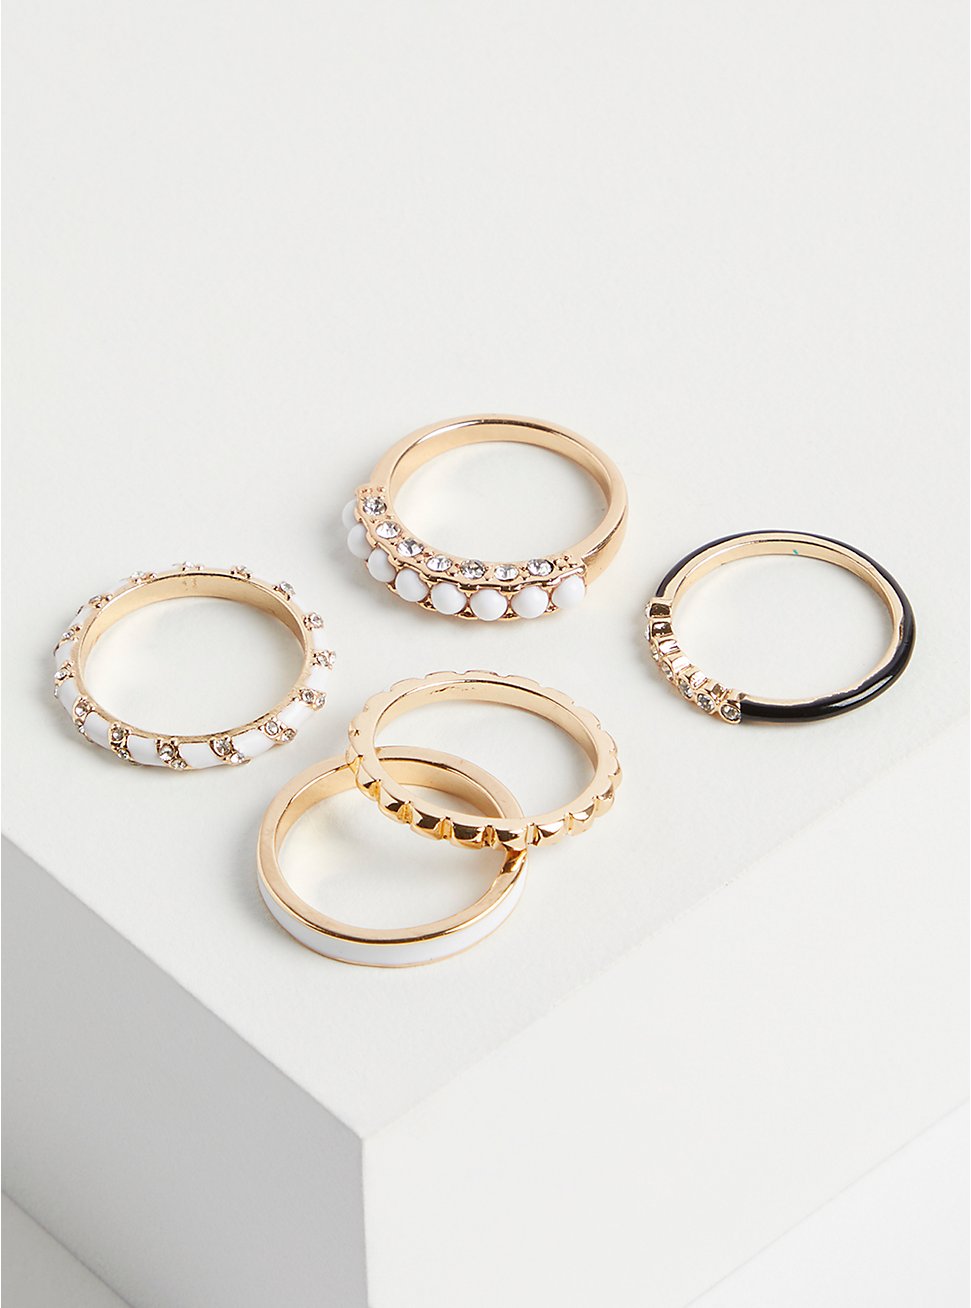 Enamel Ring Set of 5 - Gold Tone & White, GOLD, hi-res